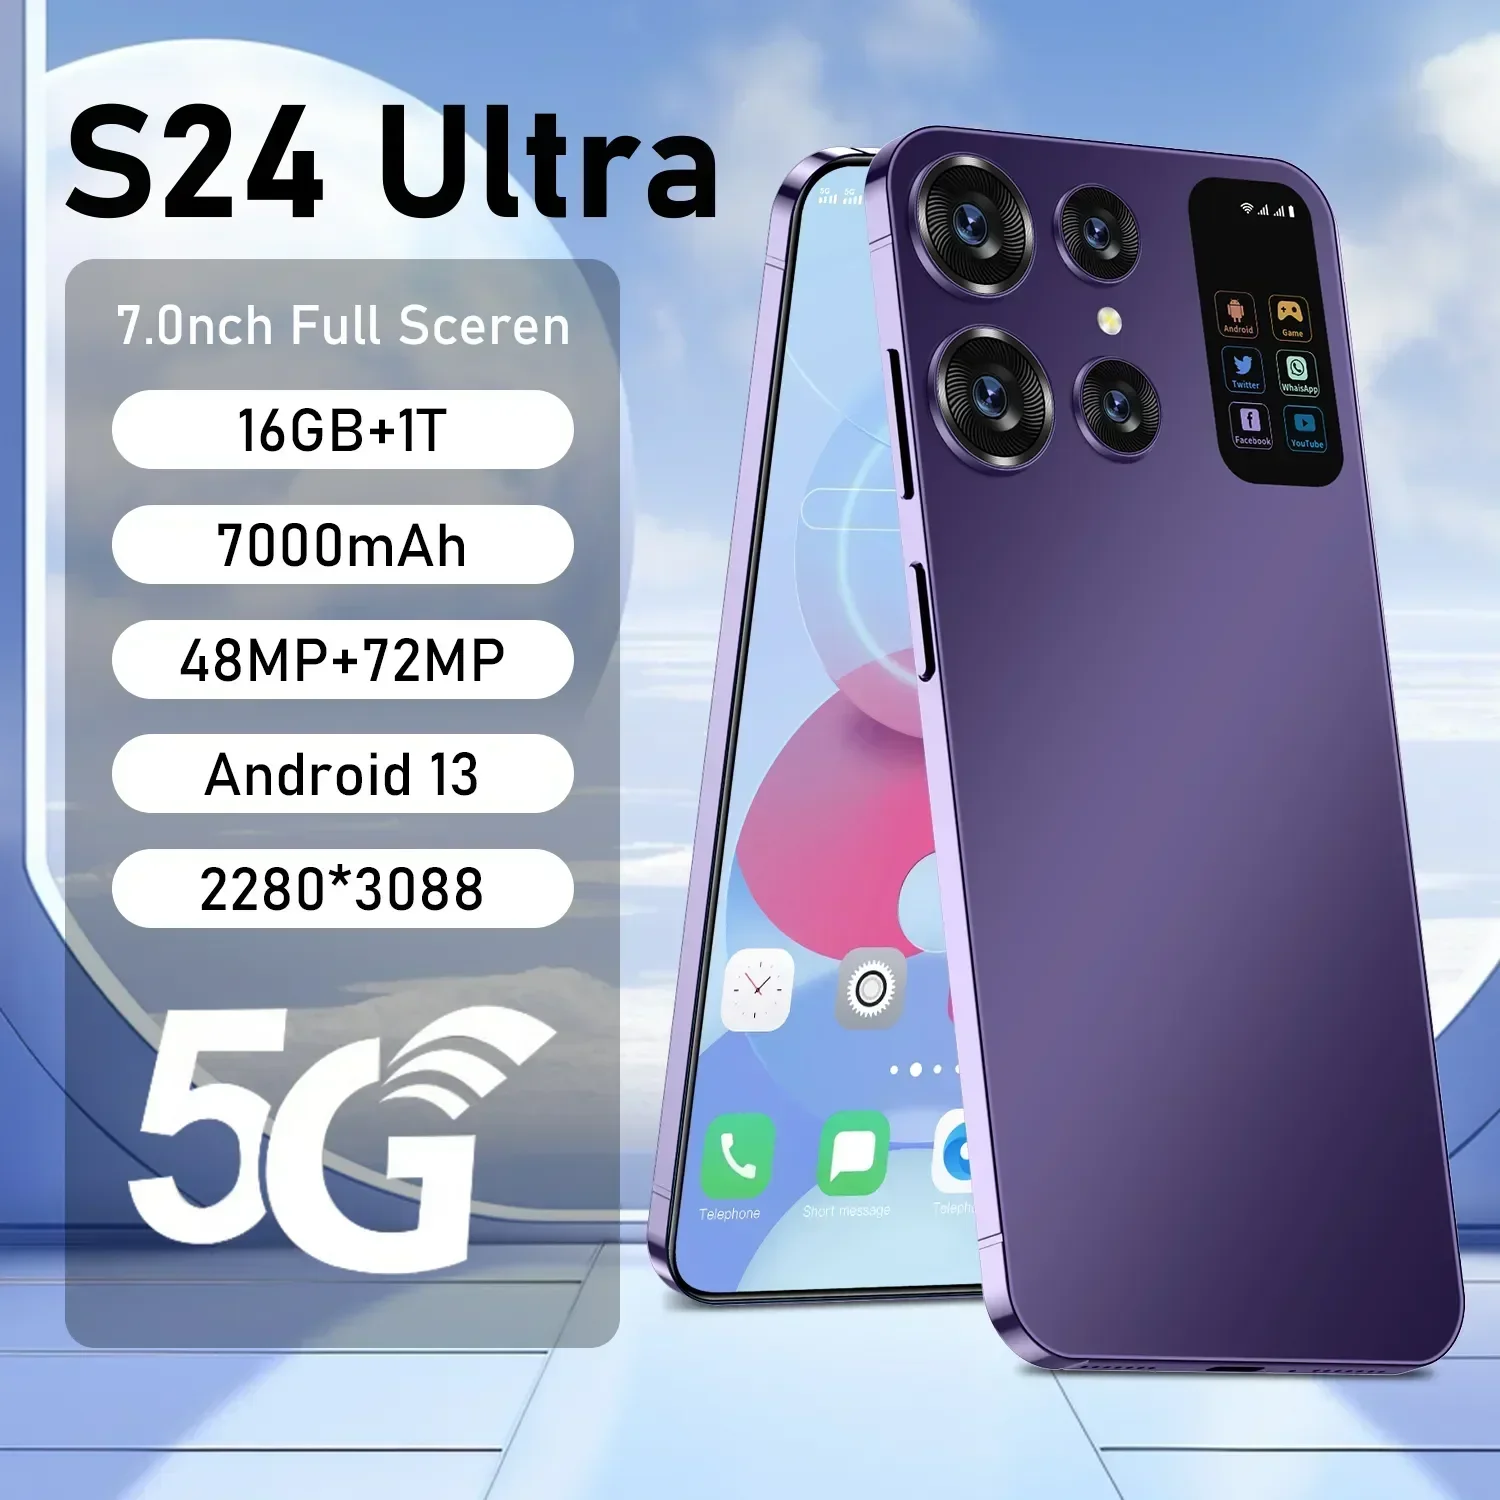 

Оригинальный смартфон S24 s23 ultra, экран 7,0 дюйма HD, 16 ГБ + 1 ТБ, телефон с двумя Sim-картами, Android 13, разблокировка распознаванием лица, 7000 мАч, 72 МП